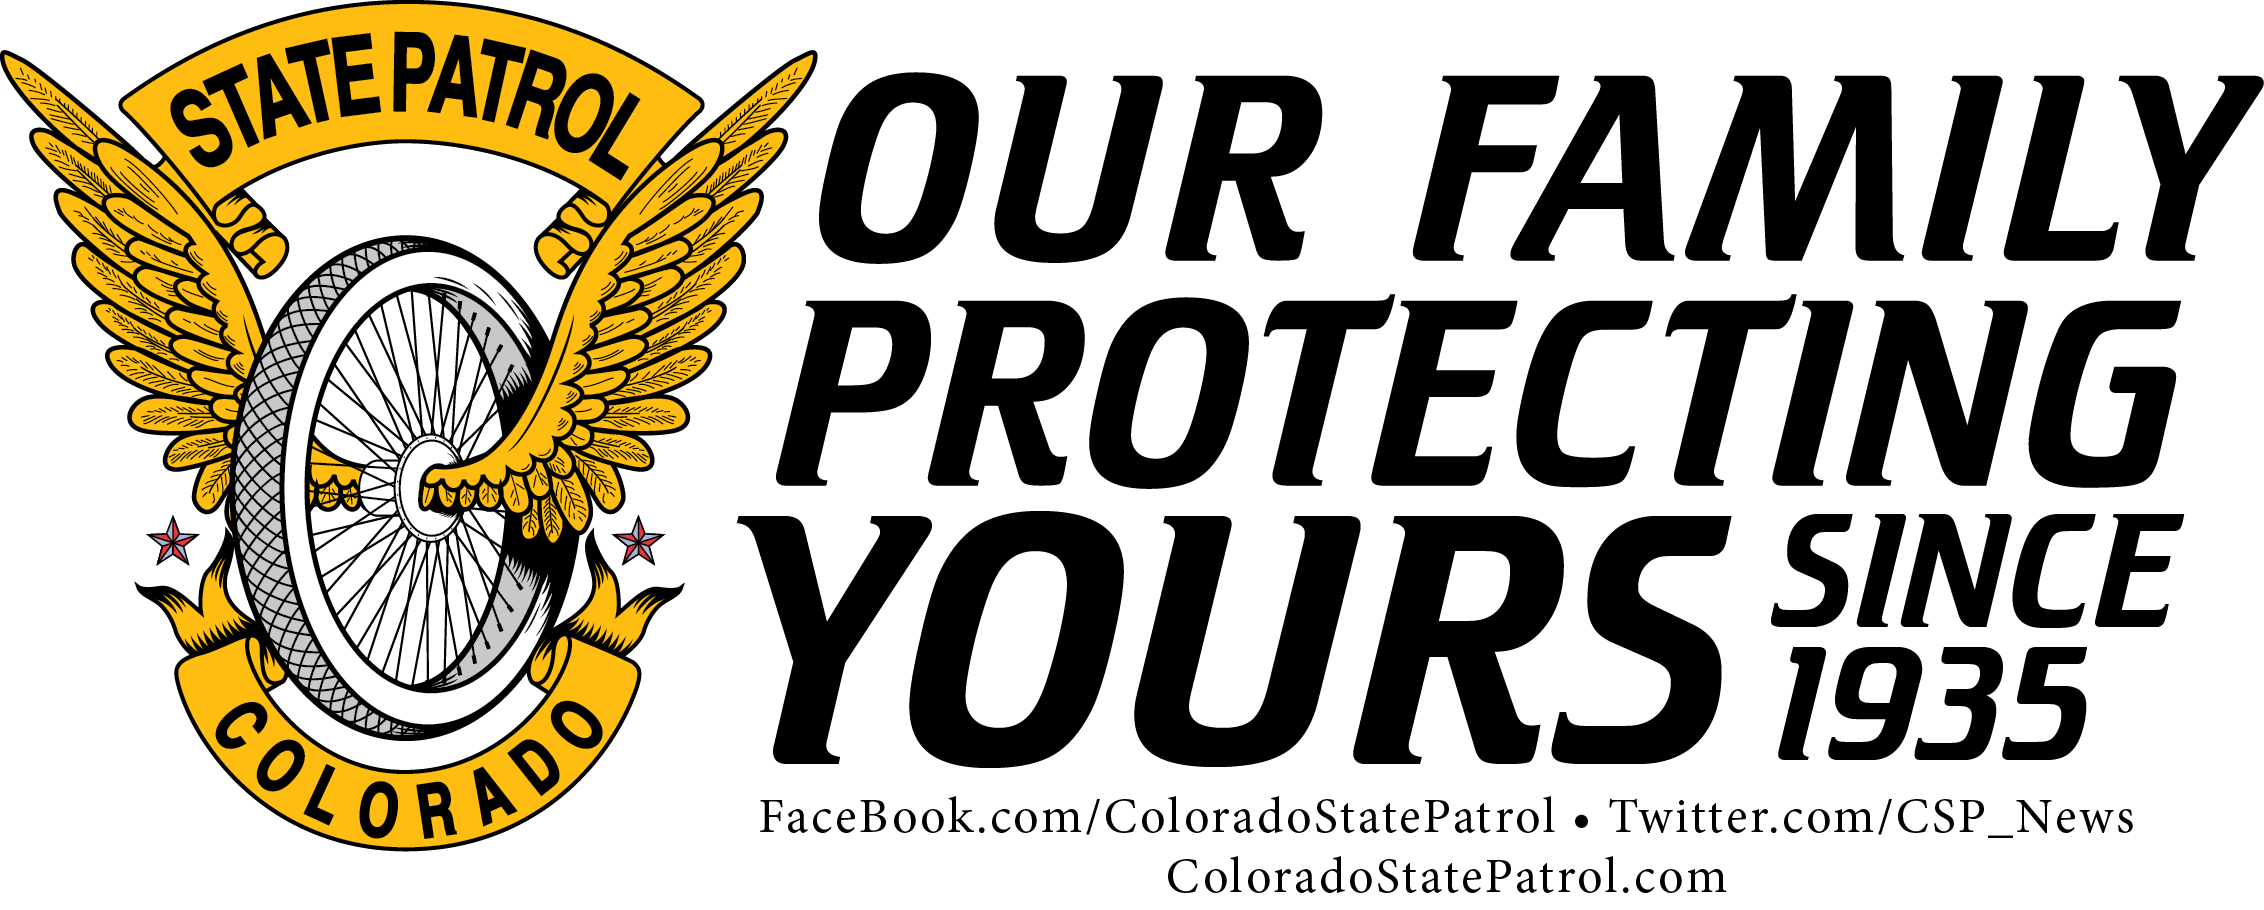 Colorado State Patrol logo